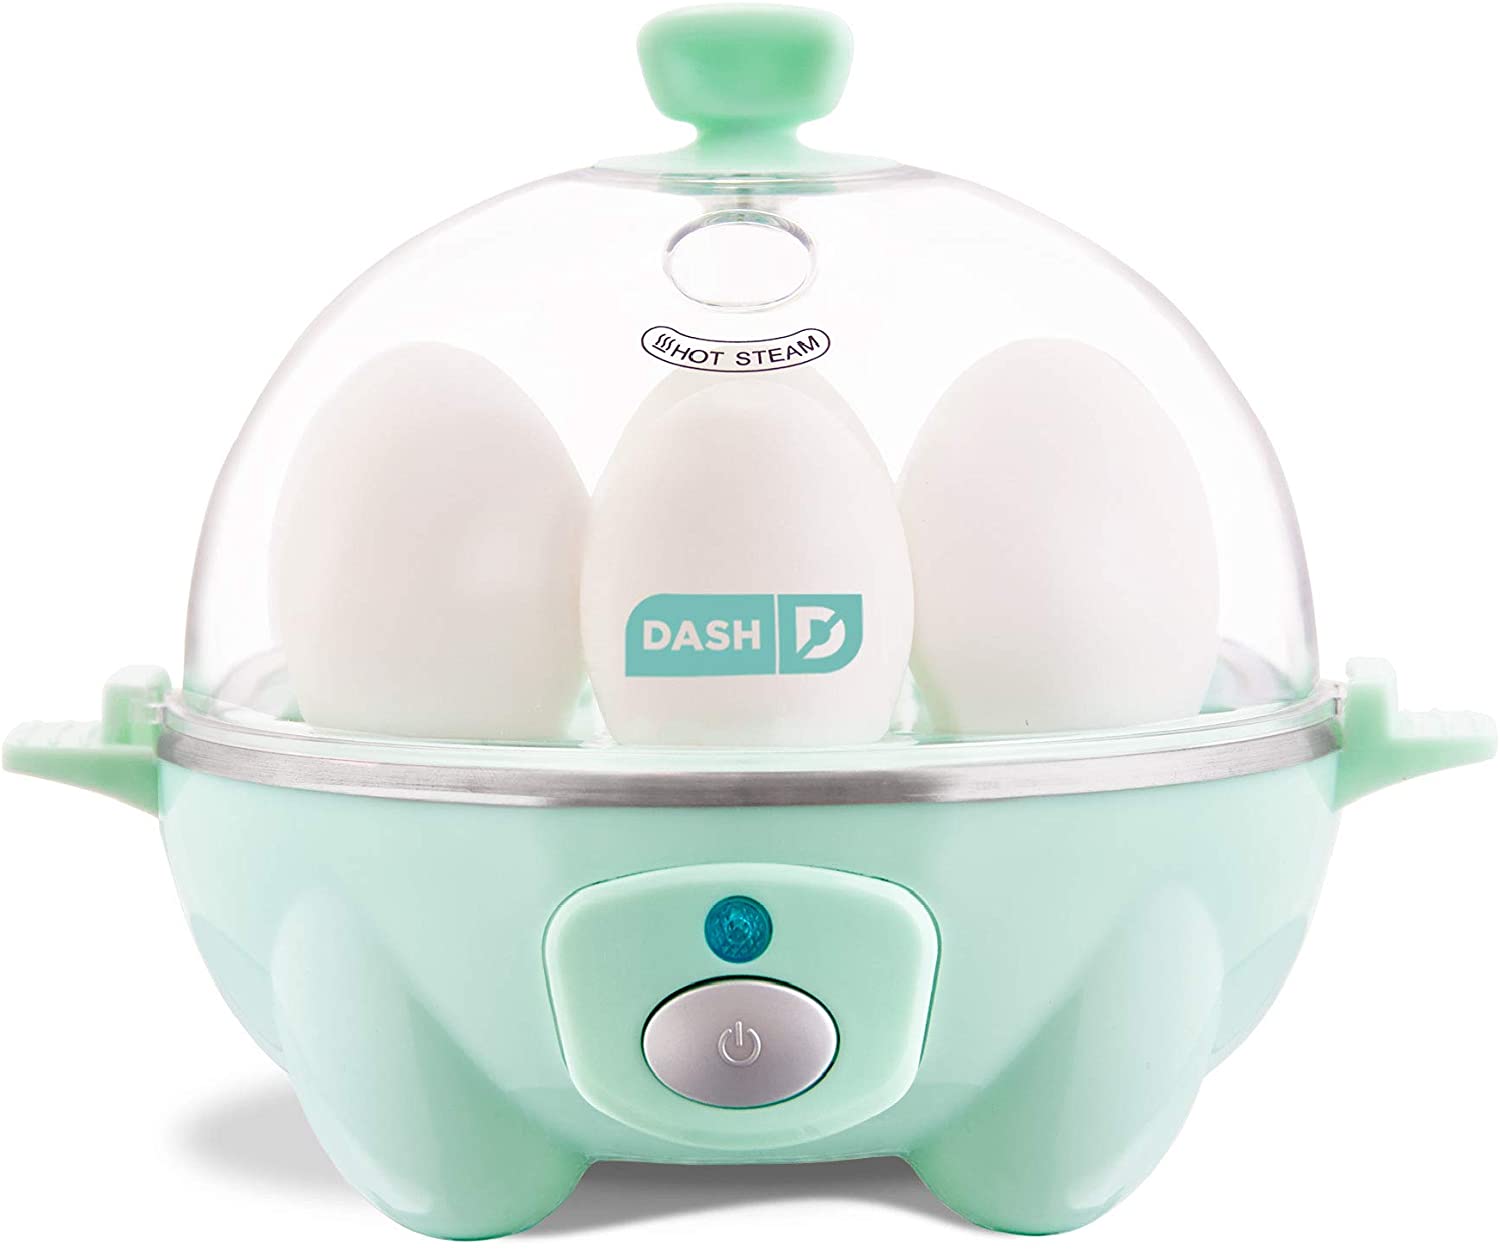 Dash egg cooker.